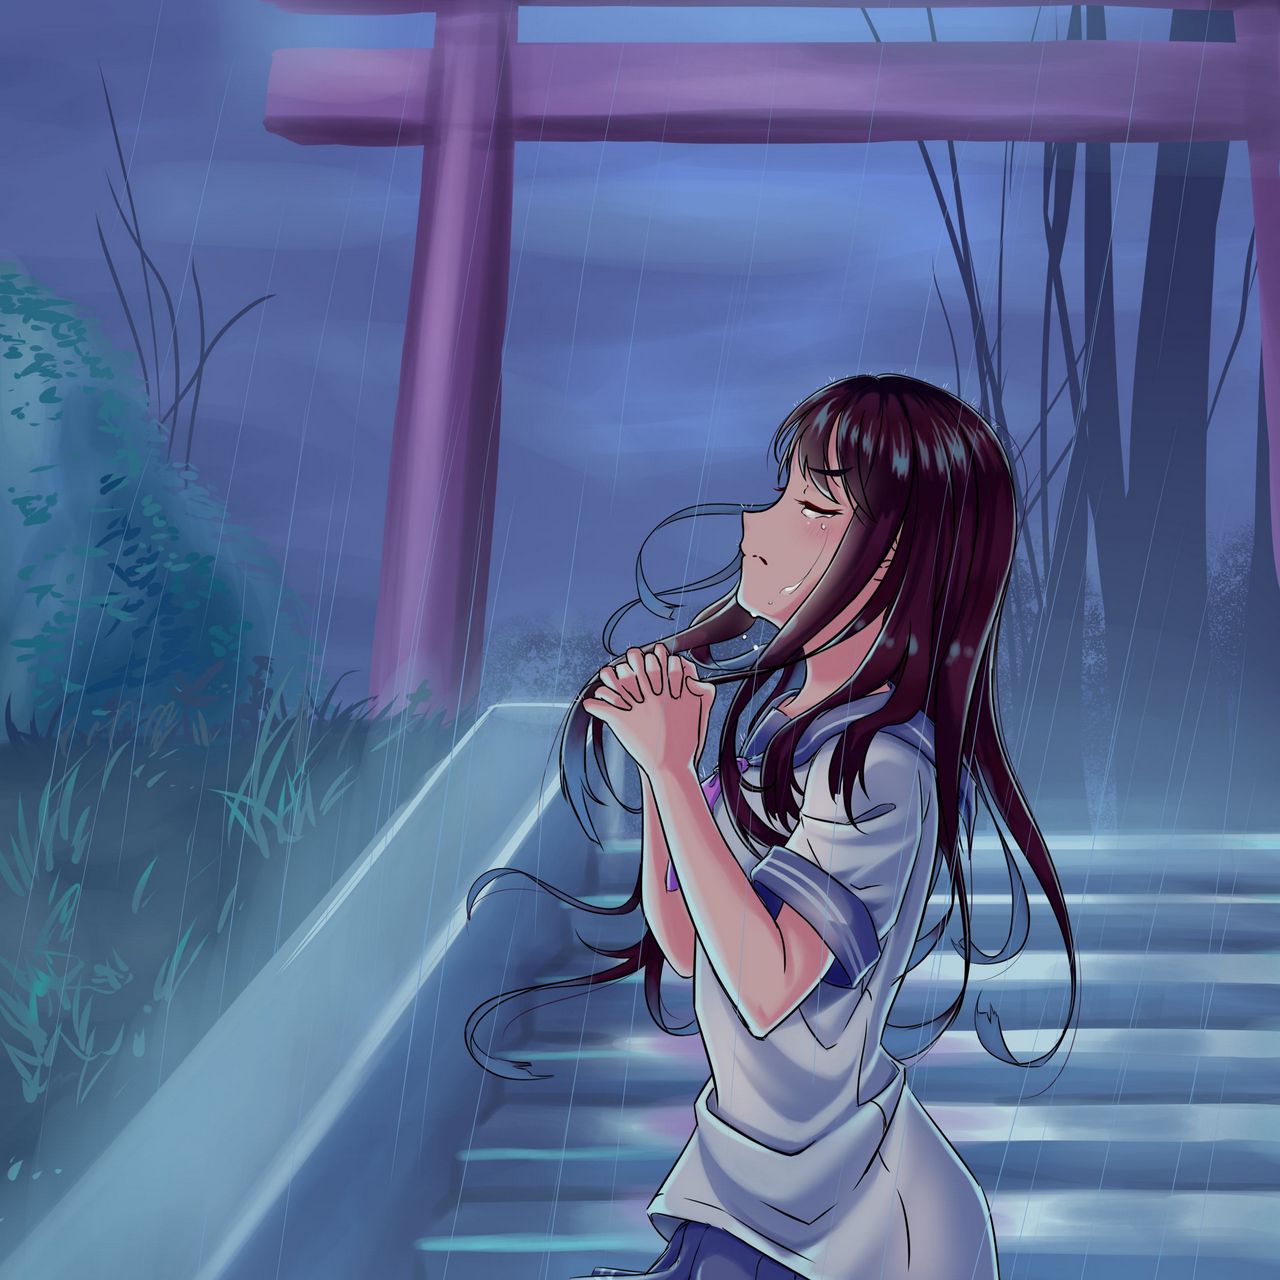 Download wallpaper 1280x1280 girl, alone, tears, sad, rain, prayer, anime  ipad, ipad 2, ipad mini for parallax hd background